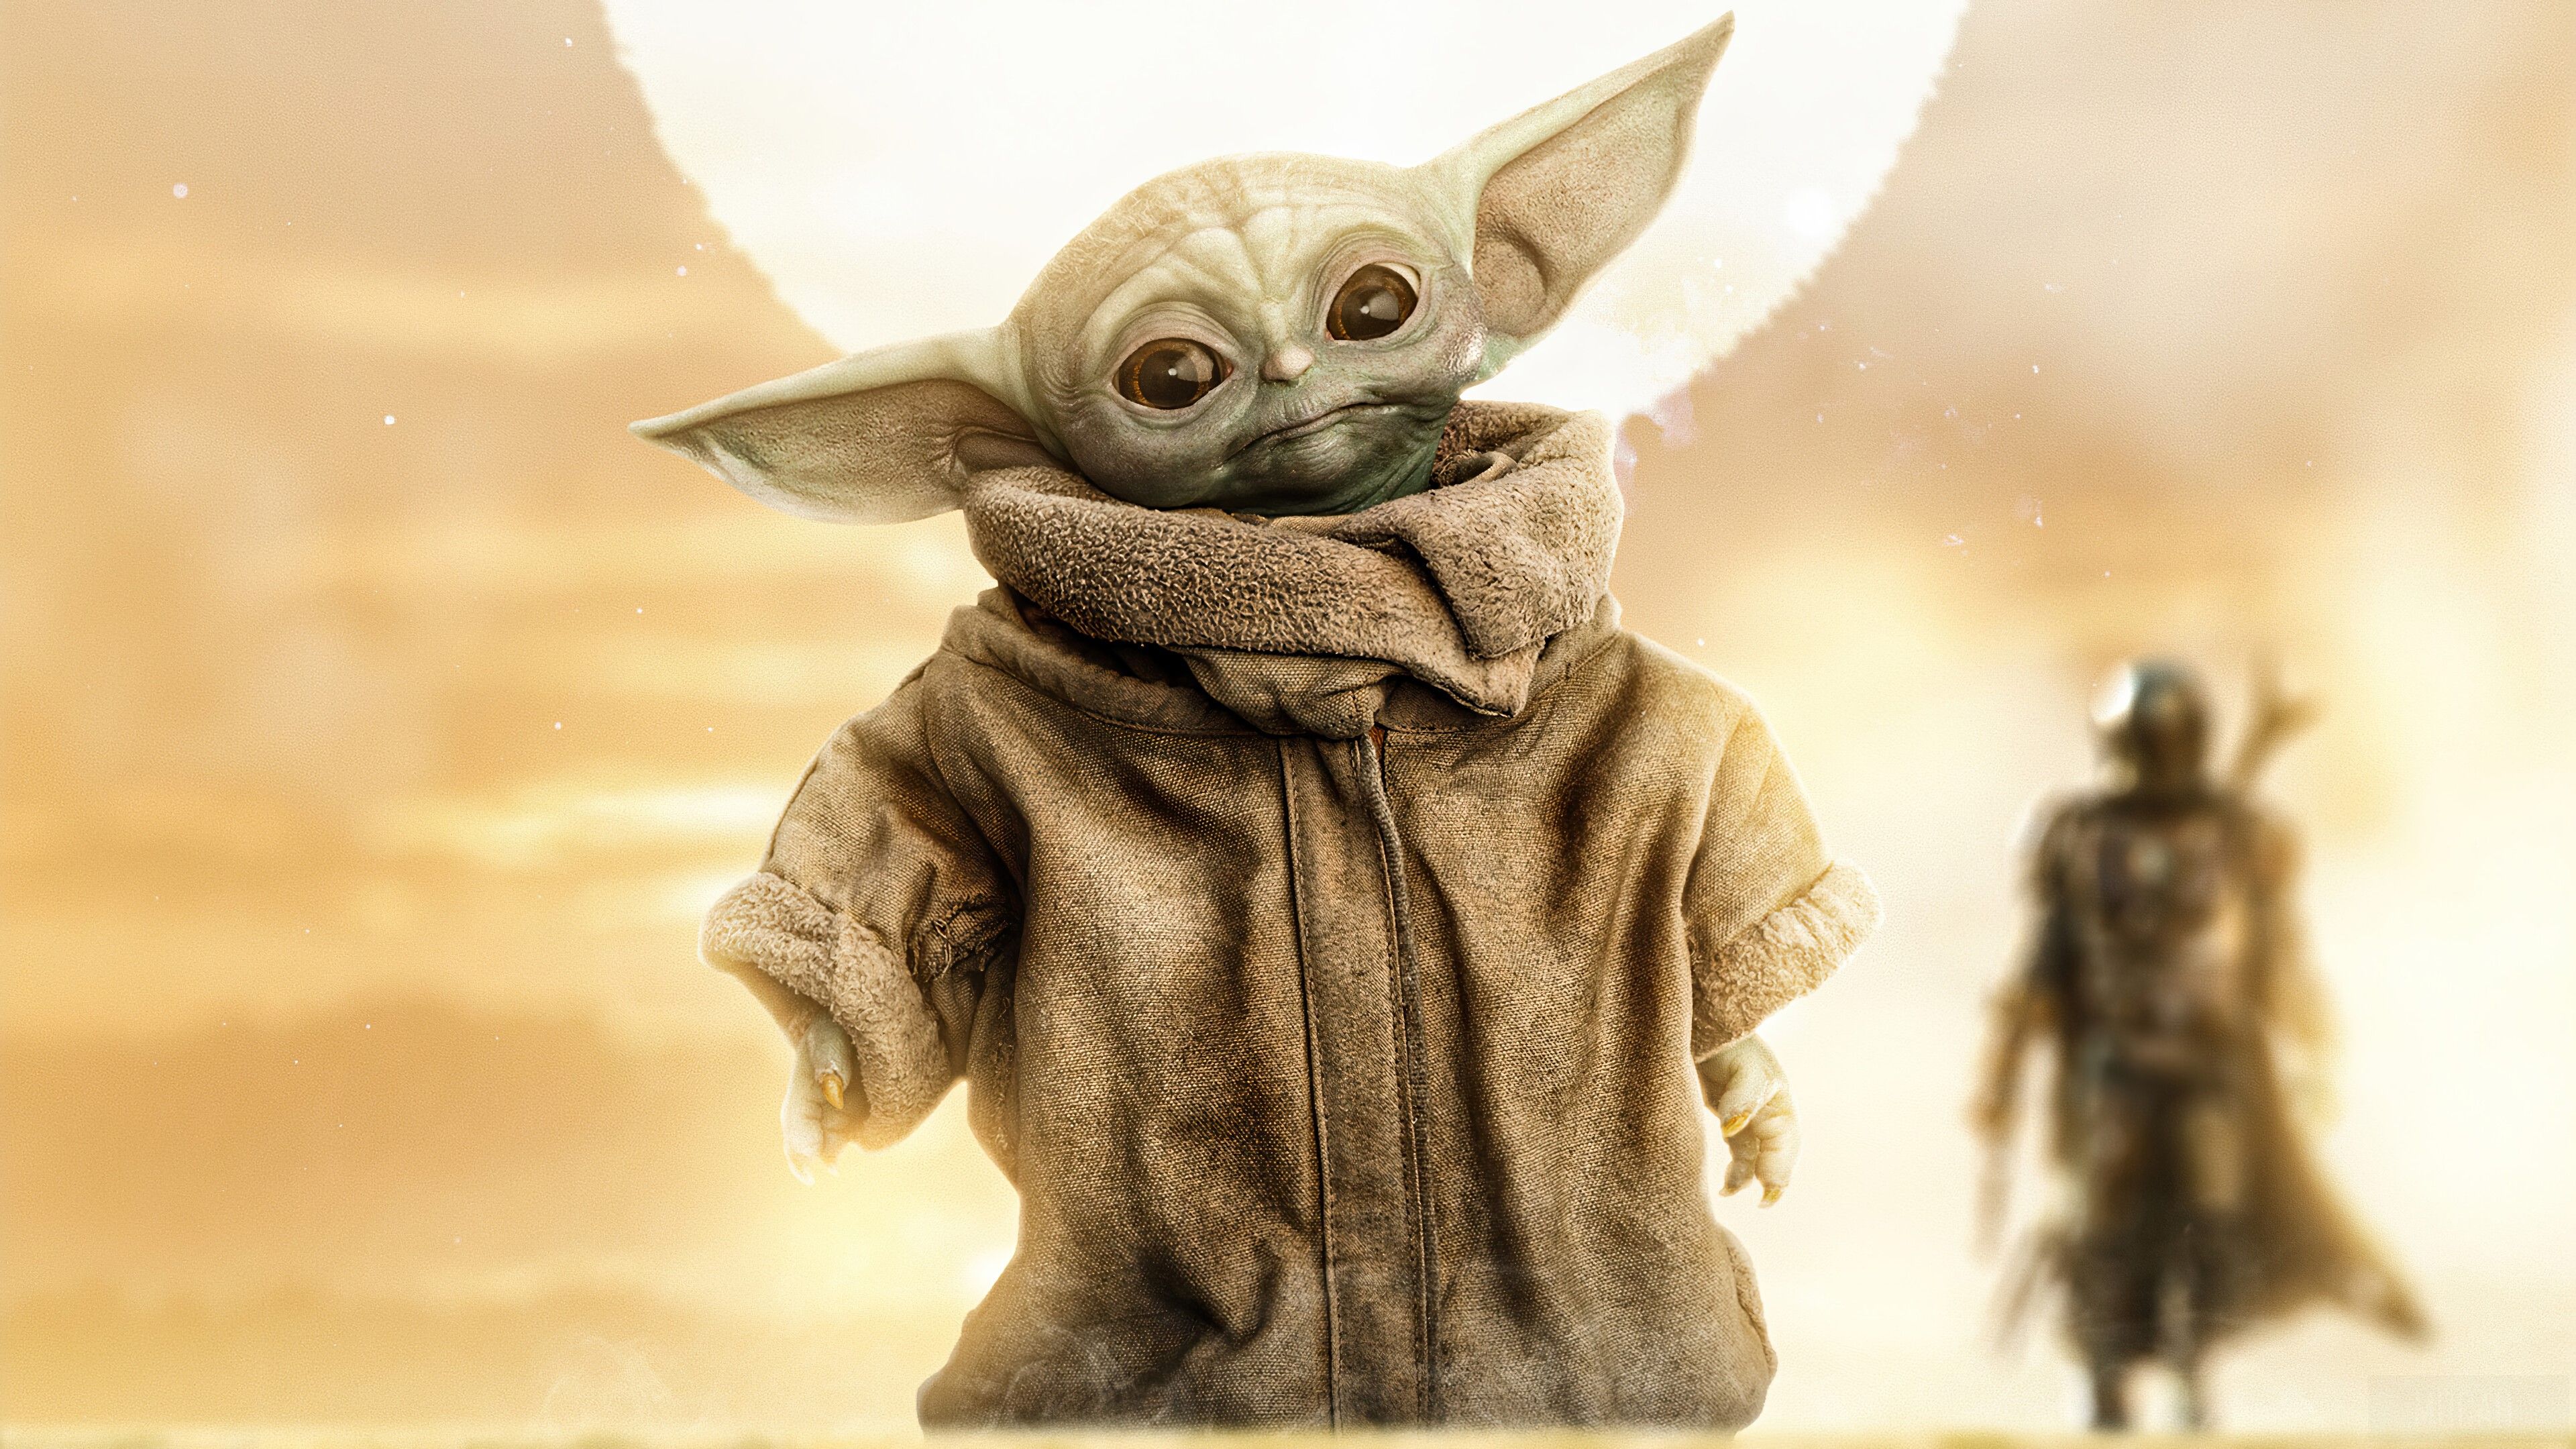 Baby Yoda 1080P, 2k, 4k HD wallpaper, background free download